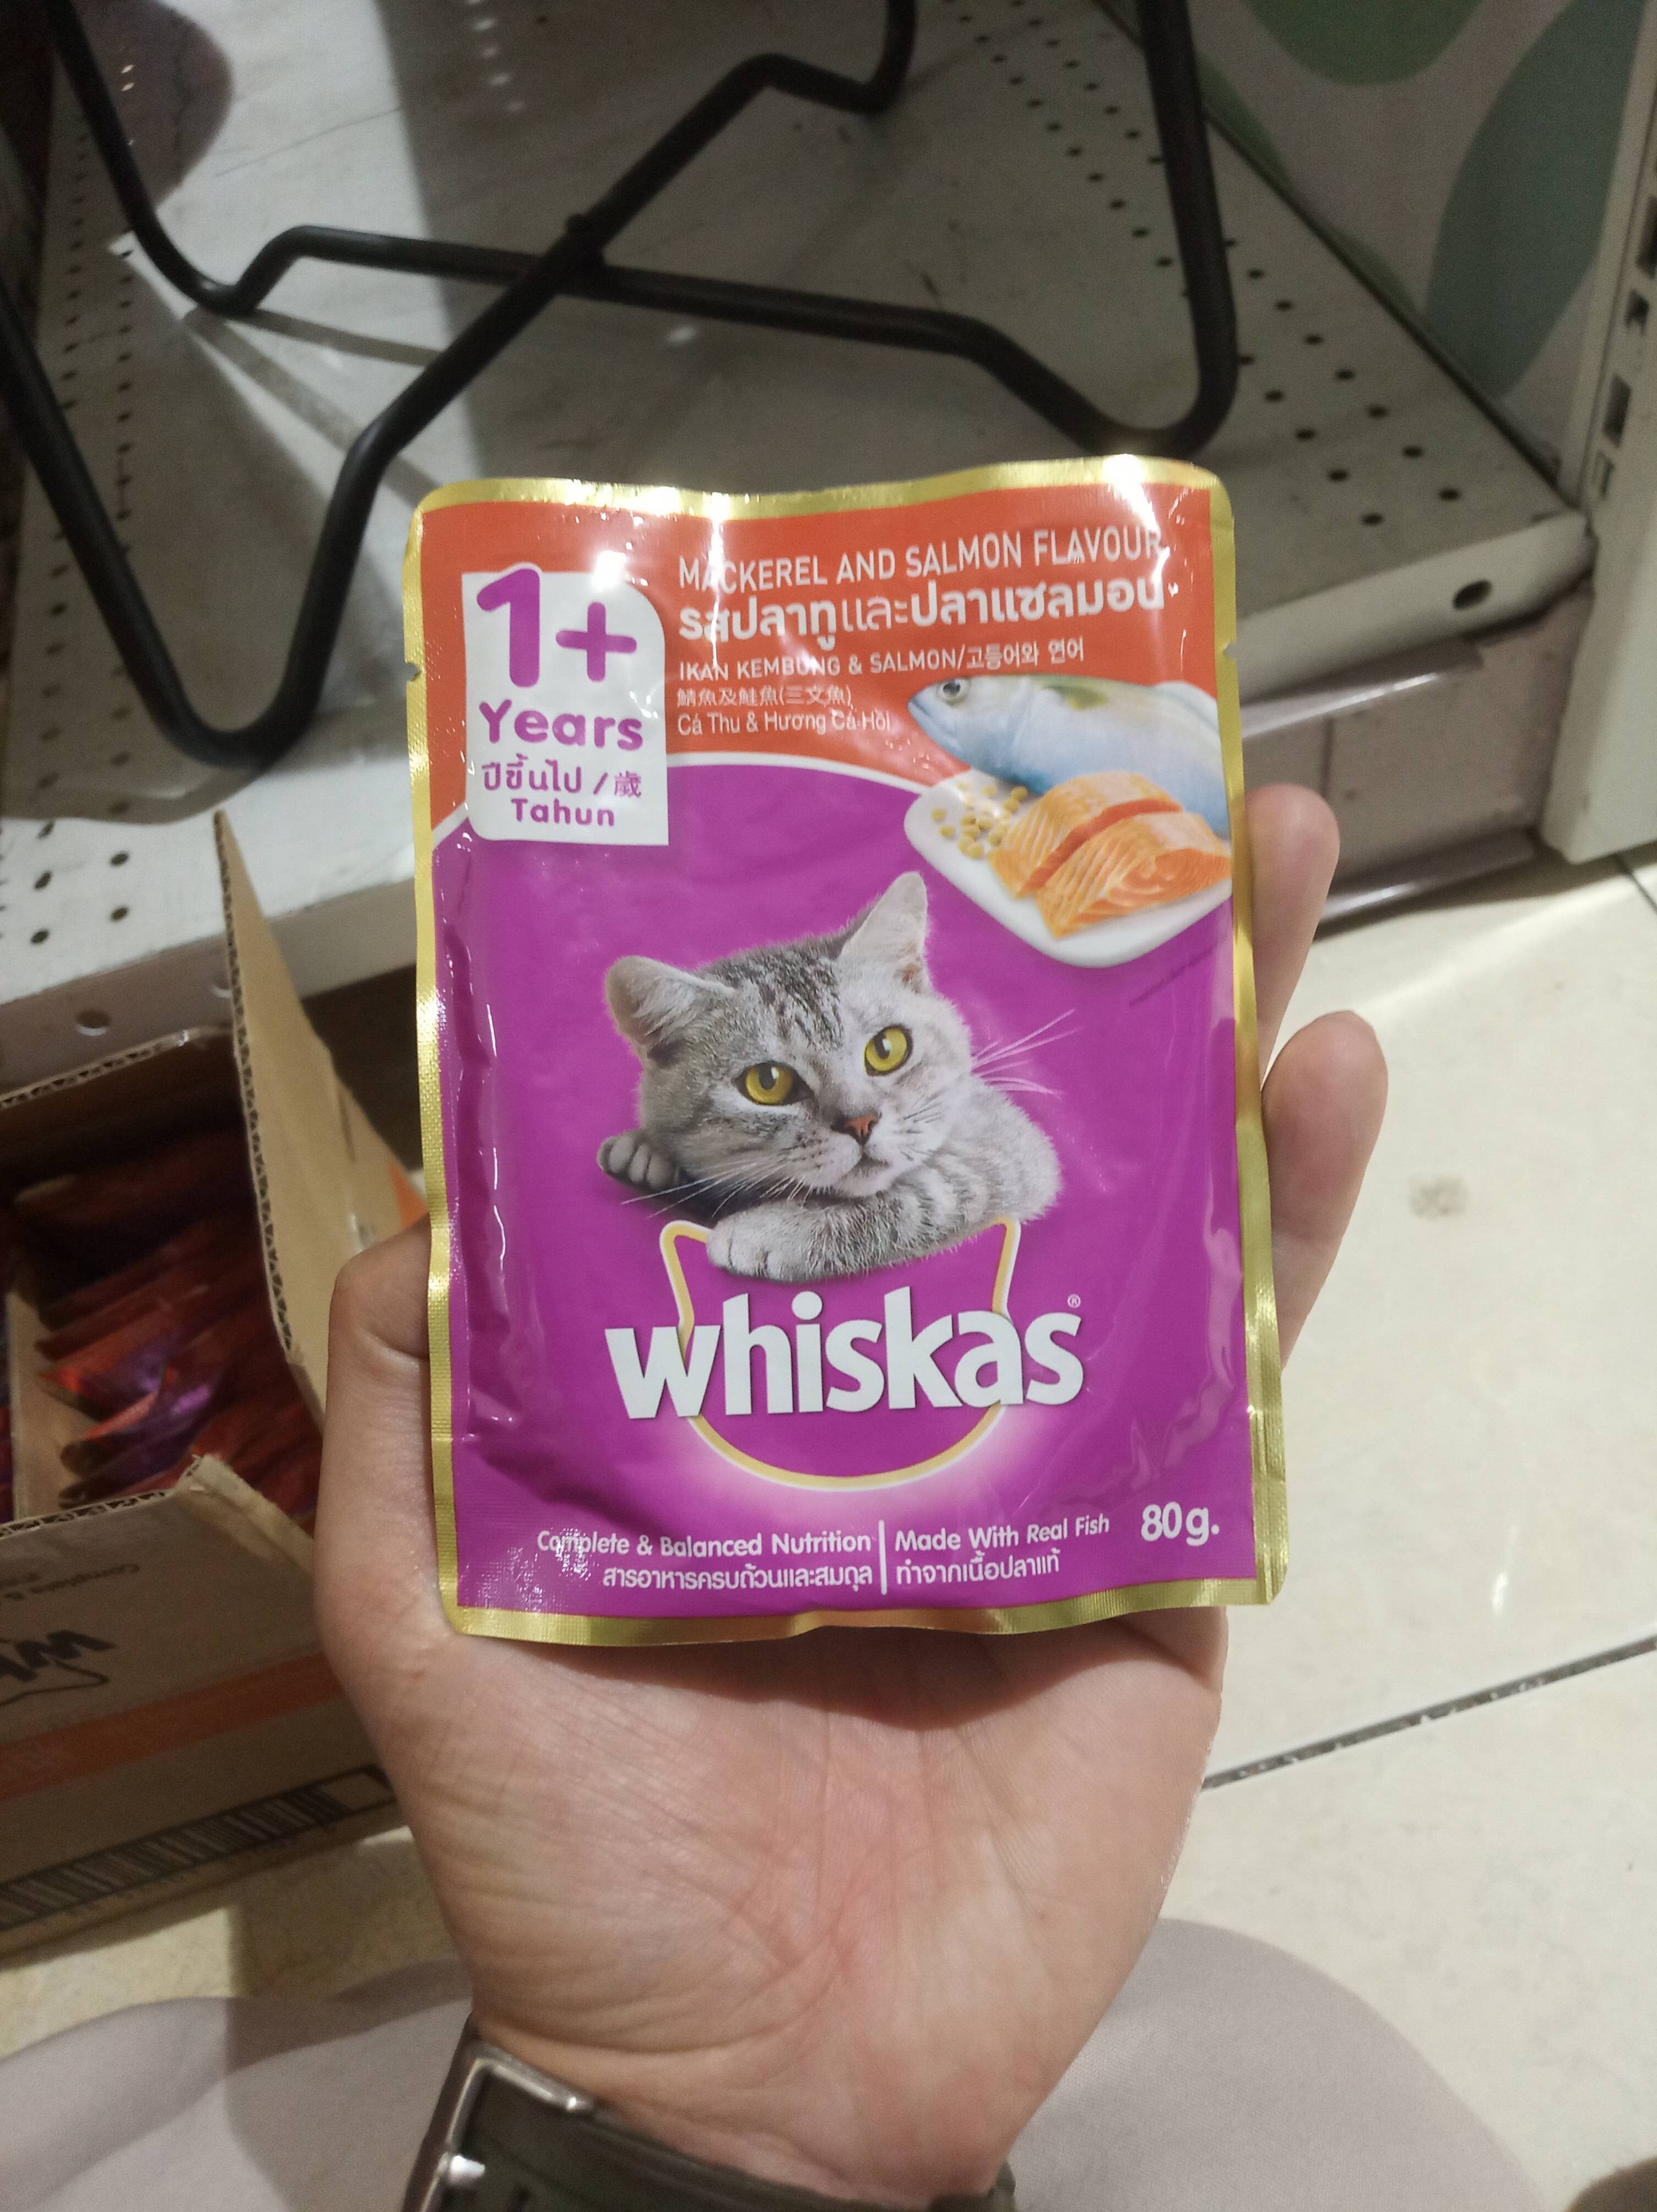 Whiskas mackerel and salmon flavour 80g - Product - en